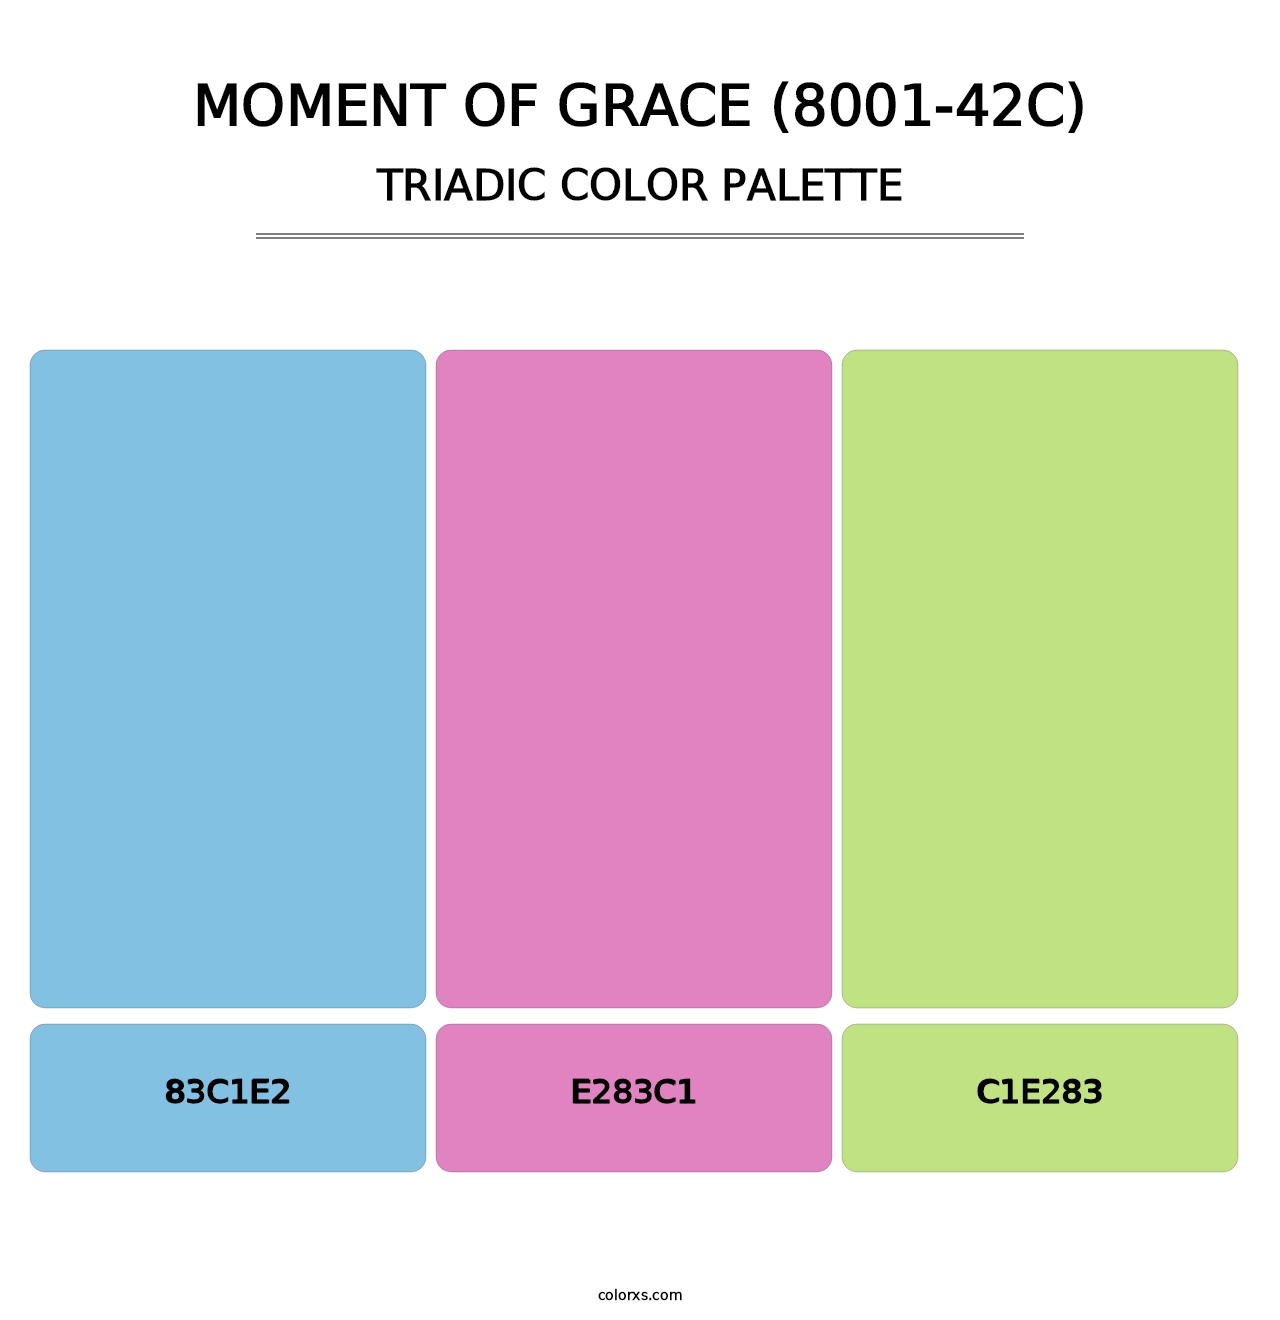 Moment of Grace (8001-42C) - Triadic Color Palette